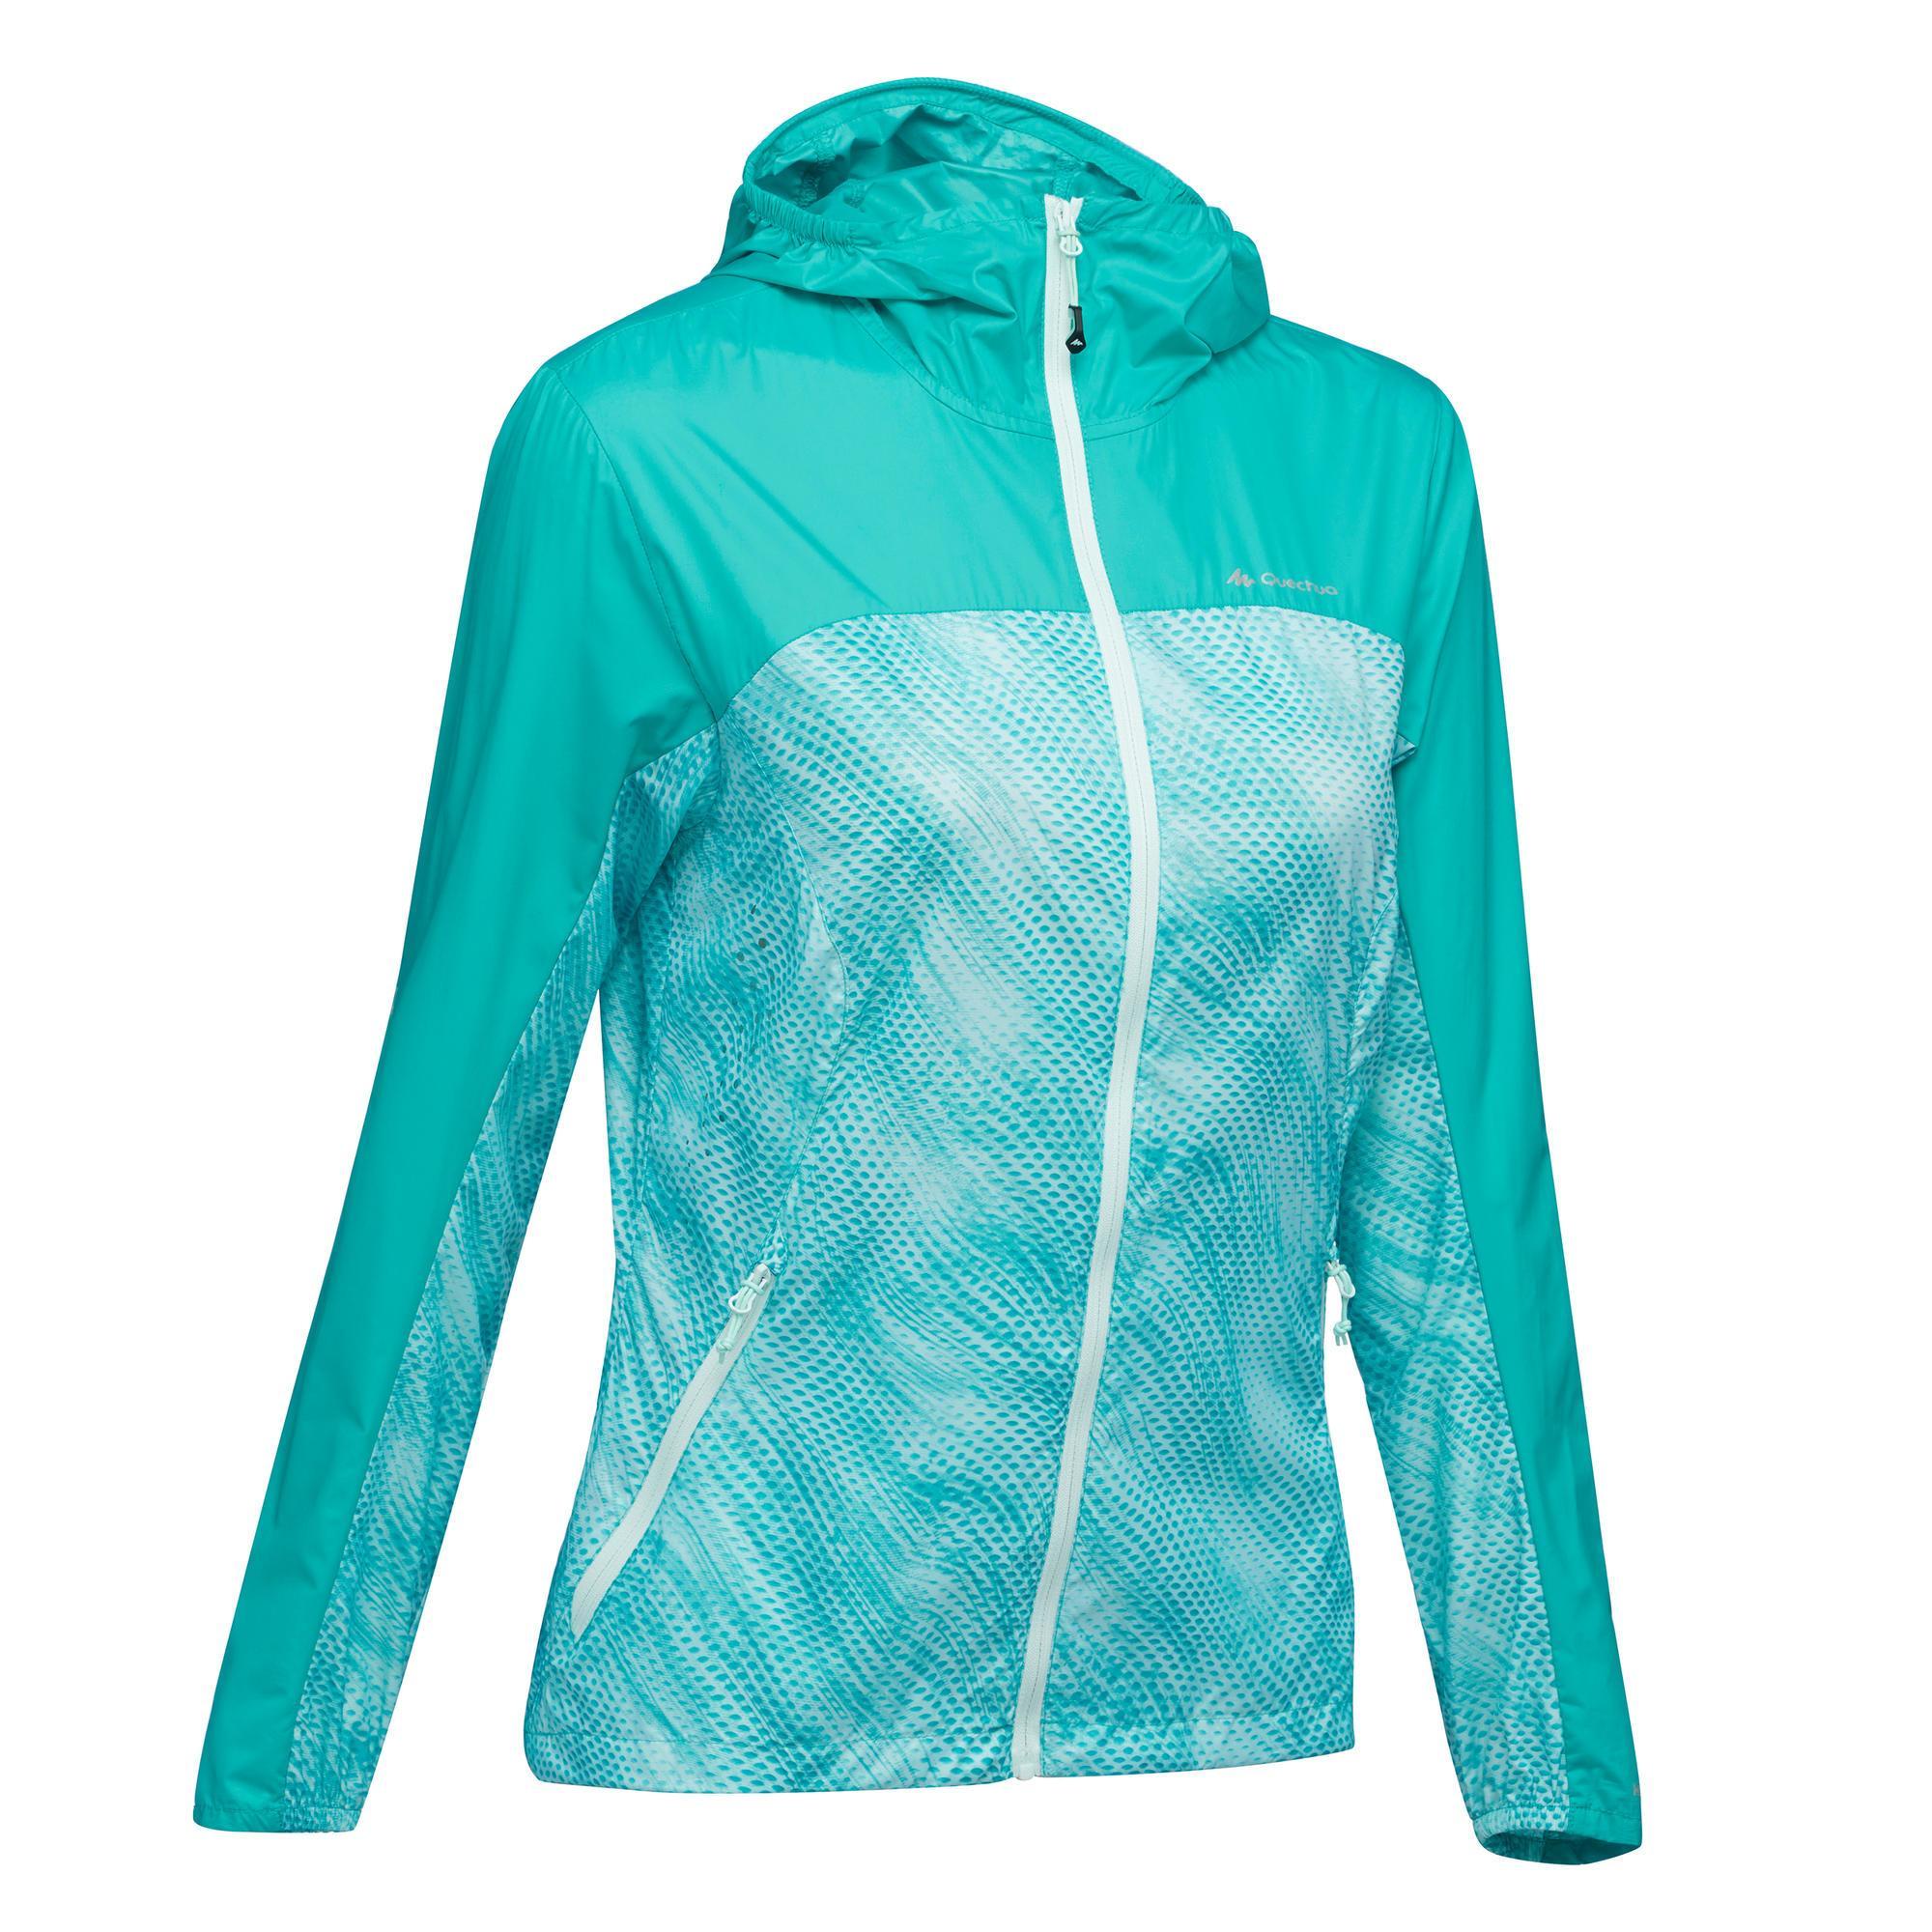 decathlon womens rain jacket